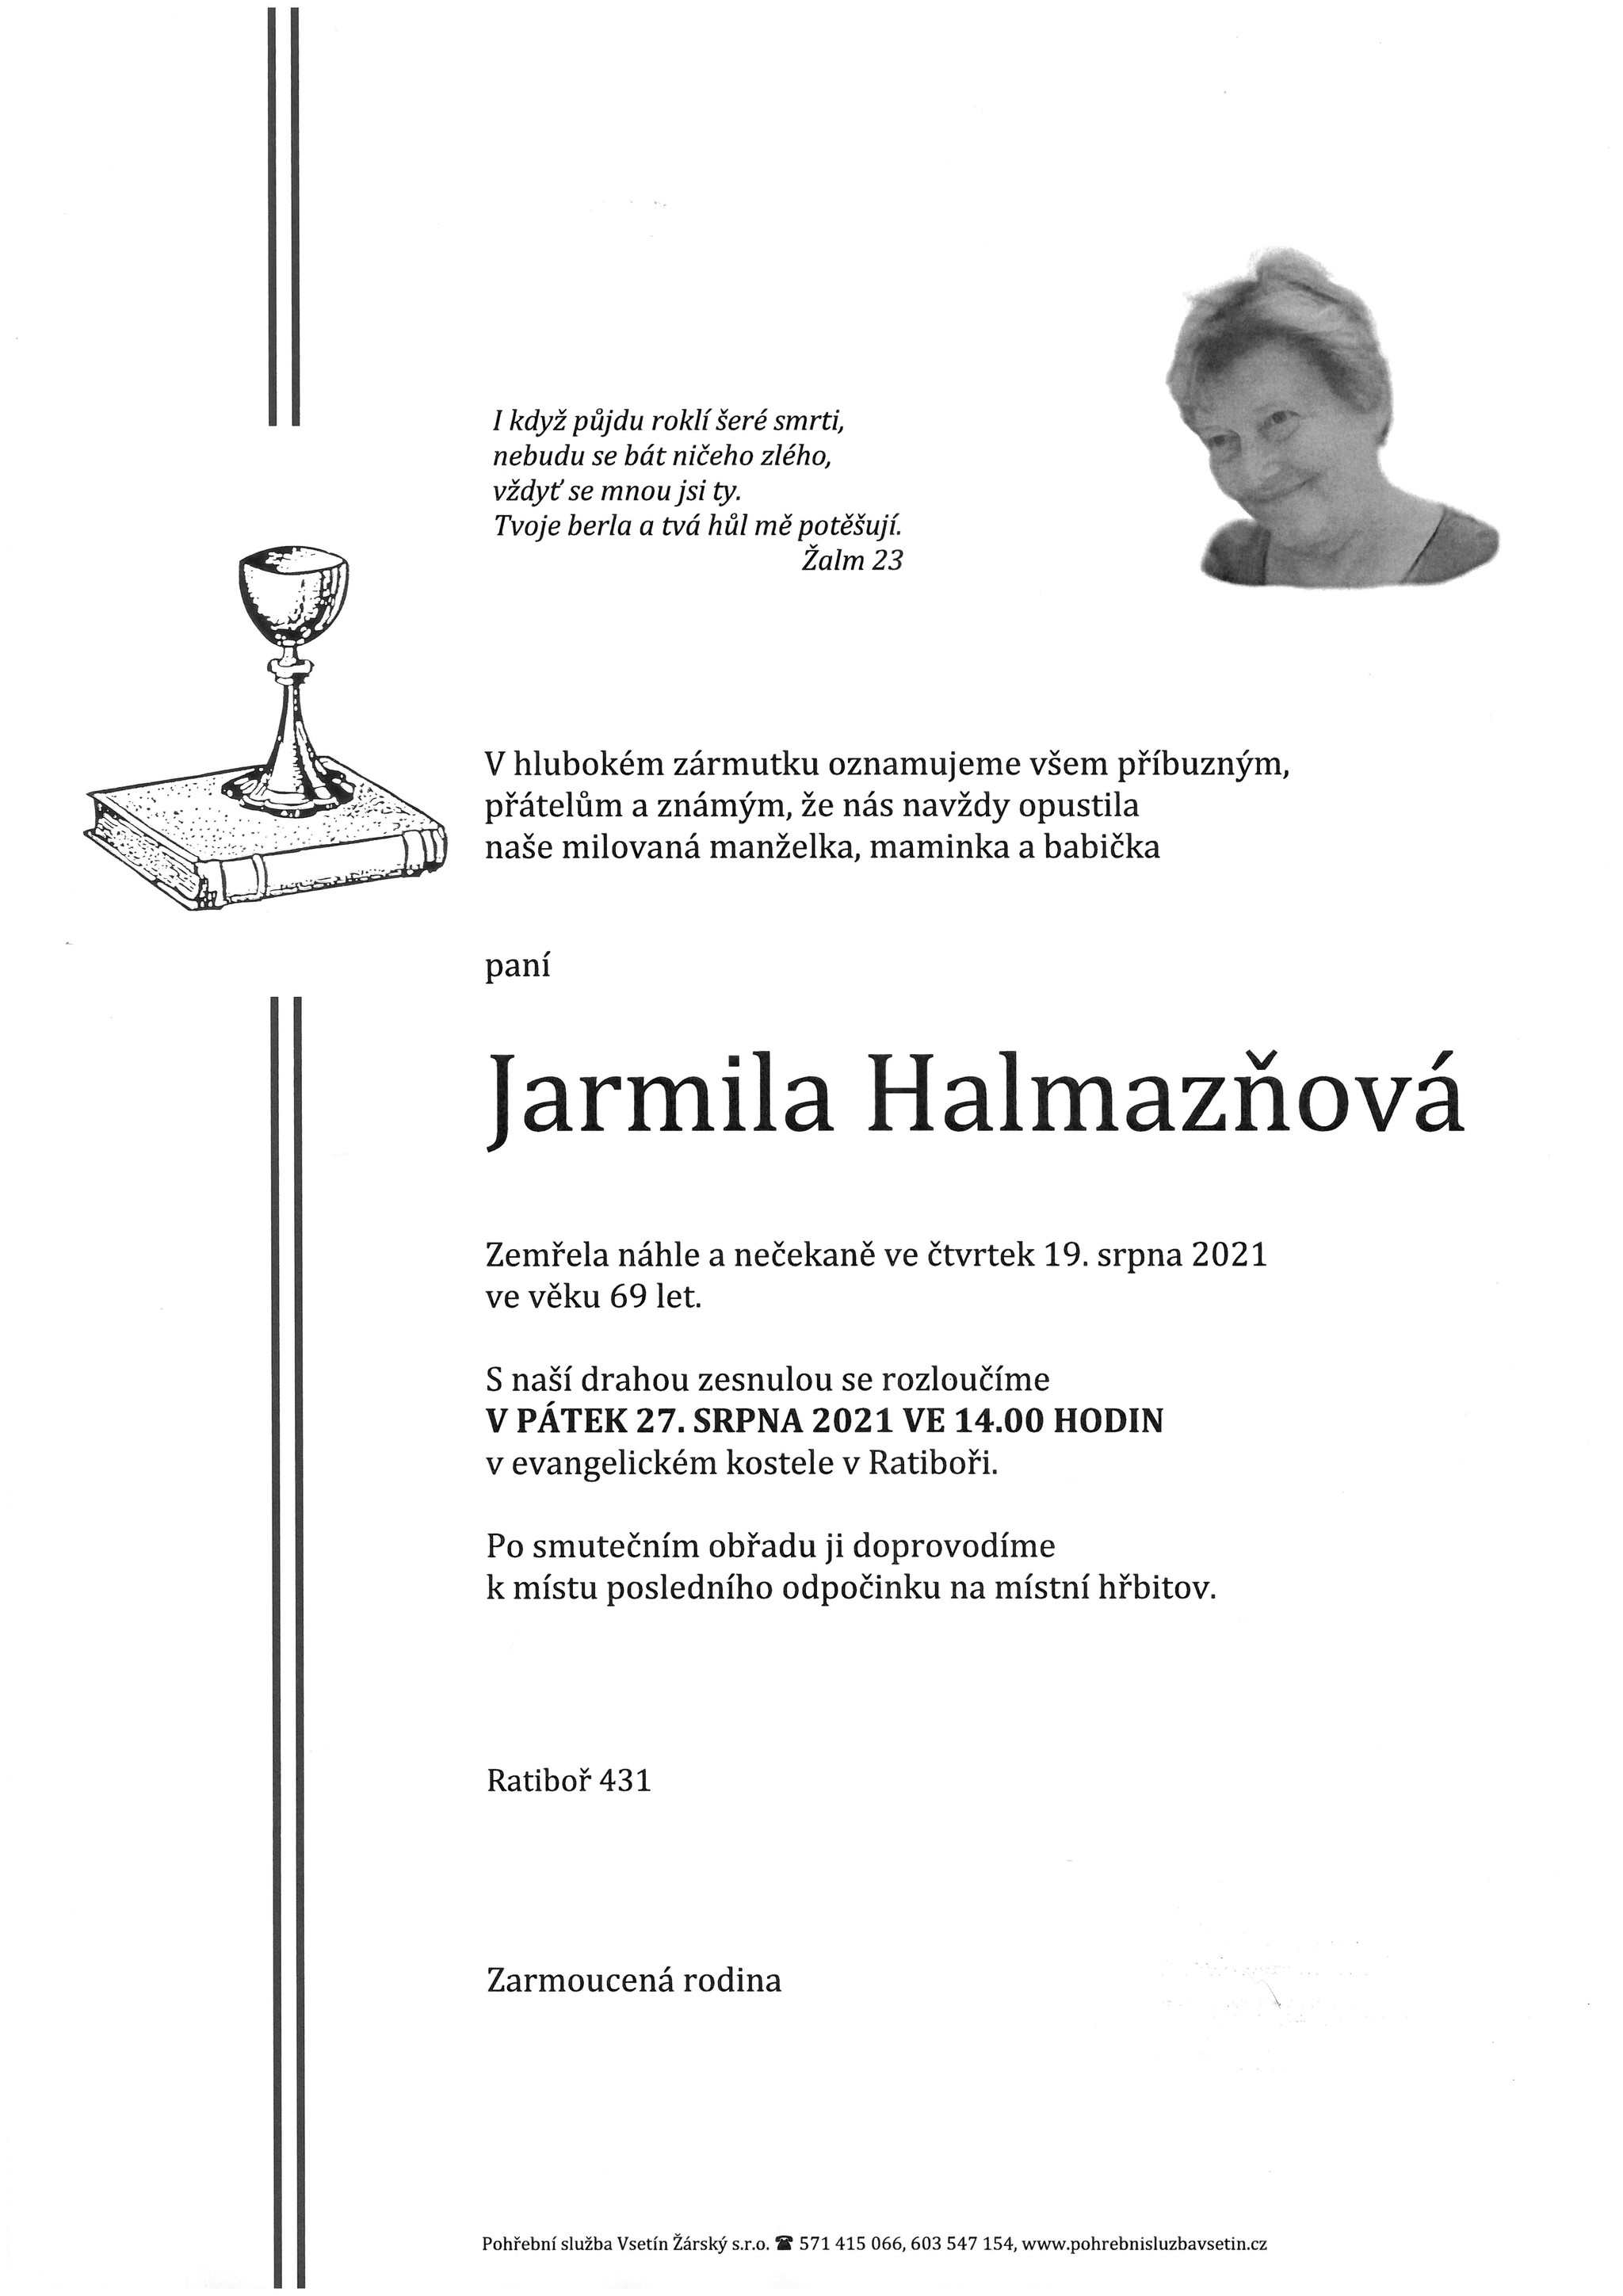 Jarmila Halmazňová